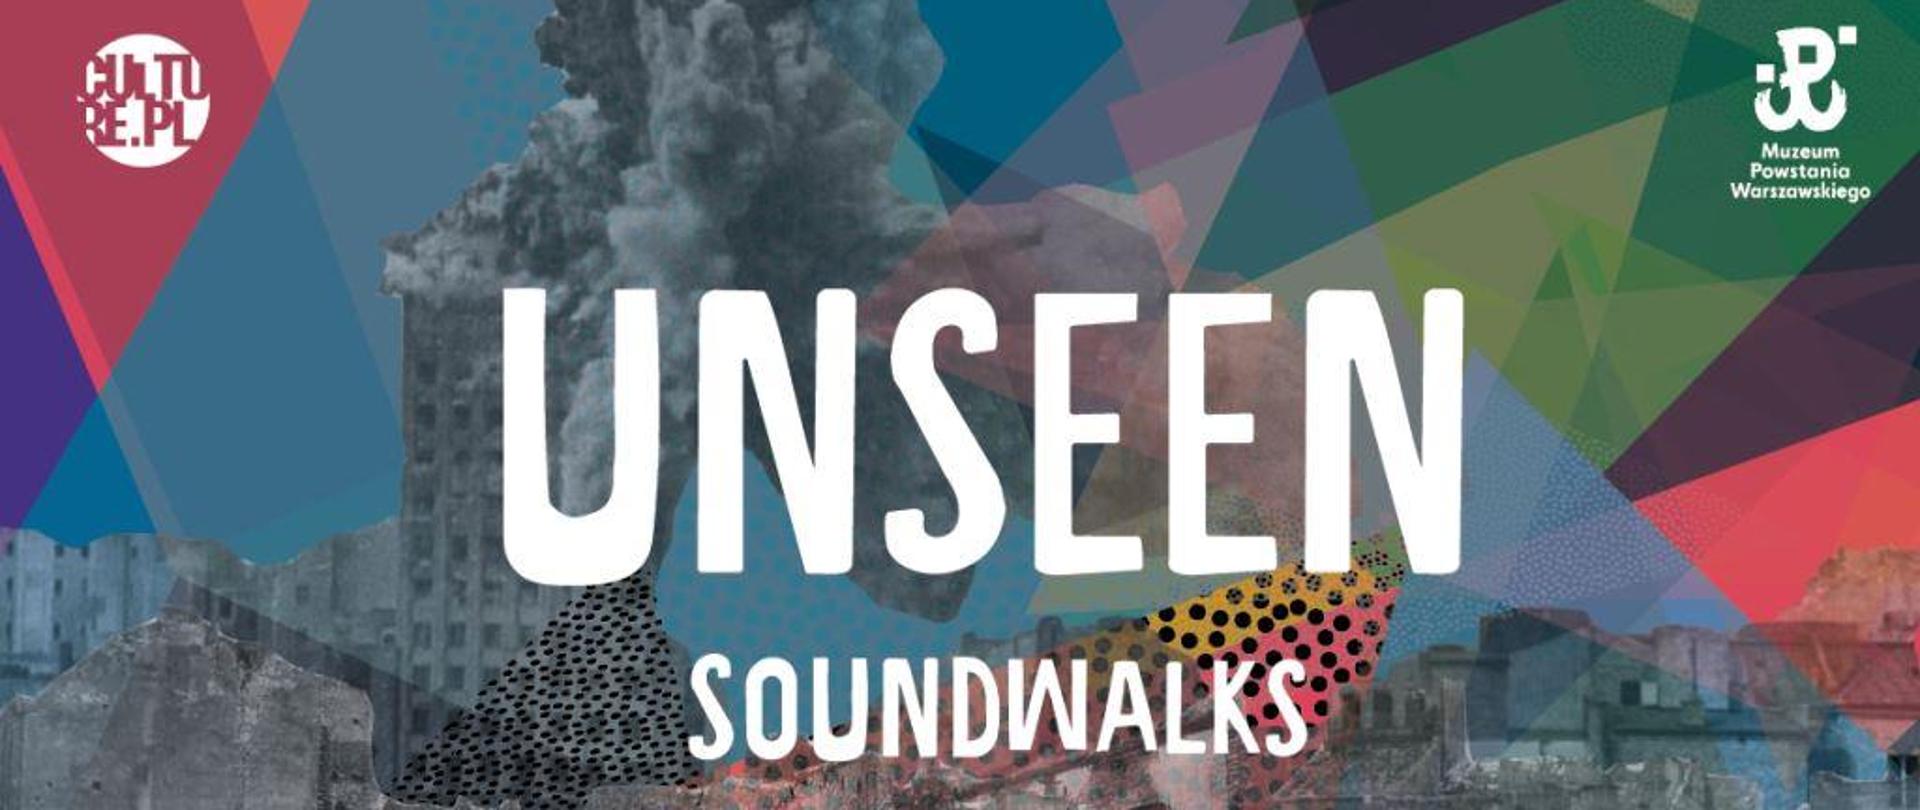 Unseen Soundwalks: Warsaw Rising ‘44 